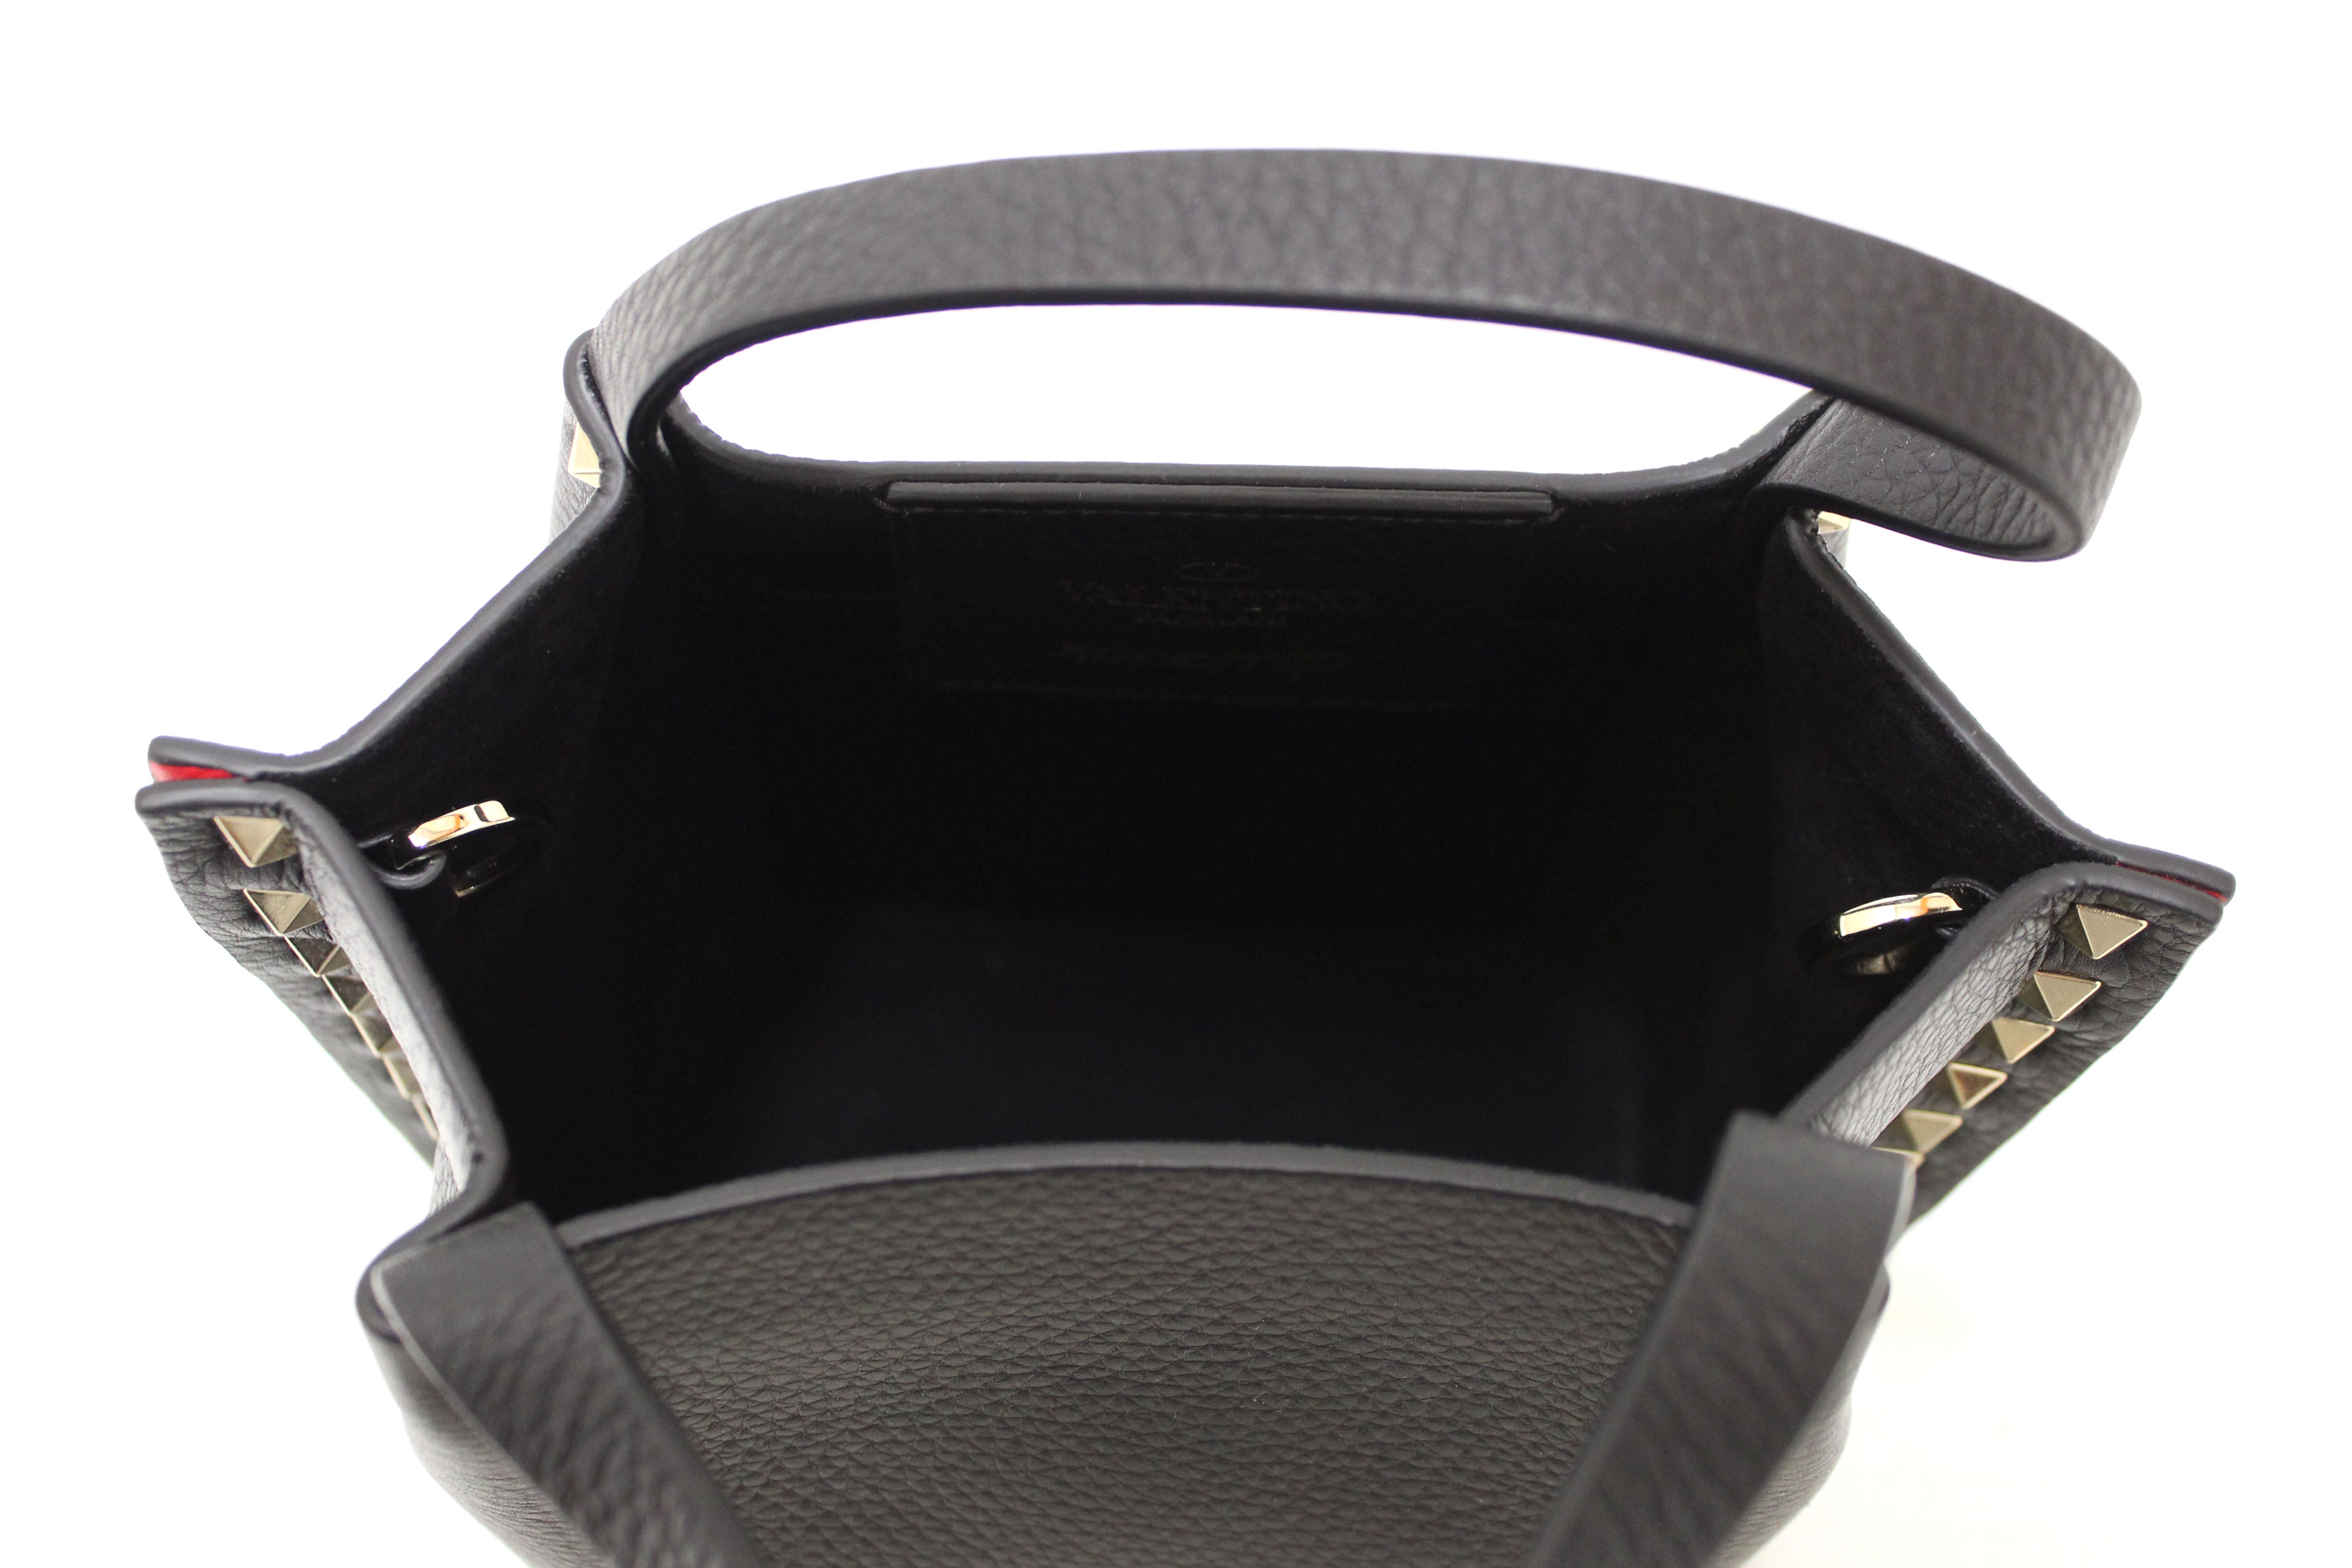 NEW Authentic Valentino Garavani Black Rockstud Grainy Calfskin Leather Crossbody Handbag